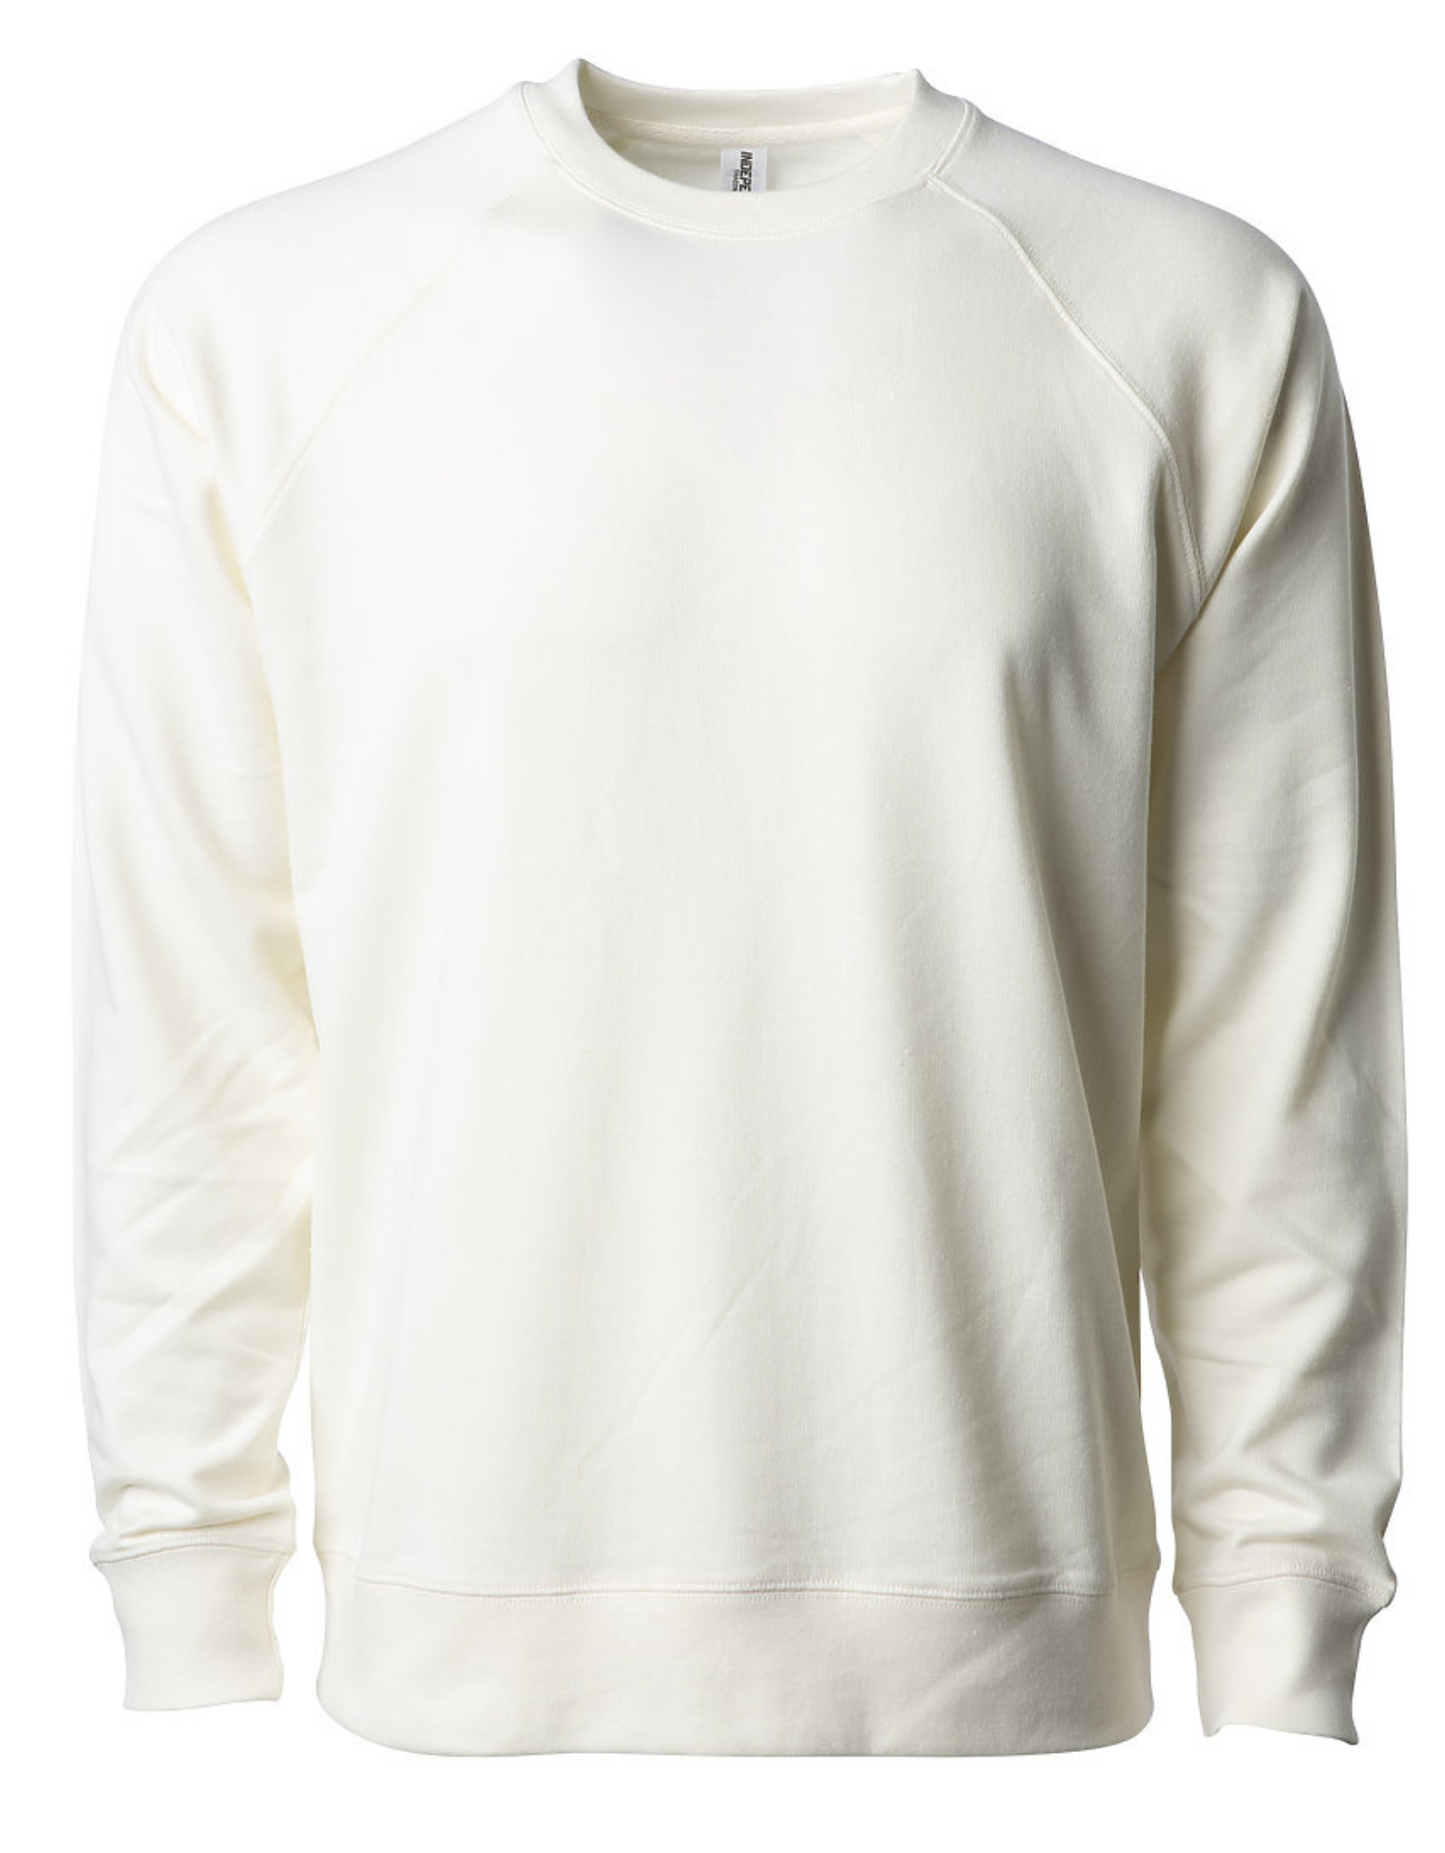 Crewneck, sweatshirt hoodies